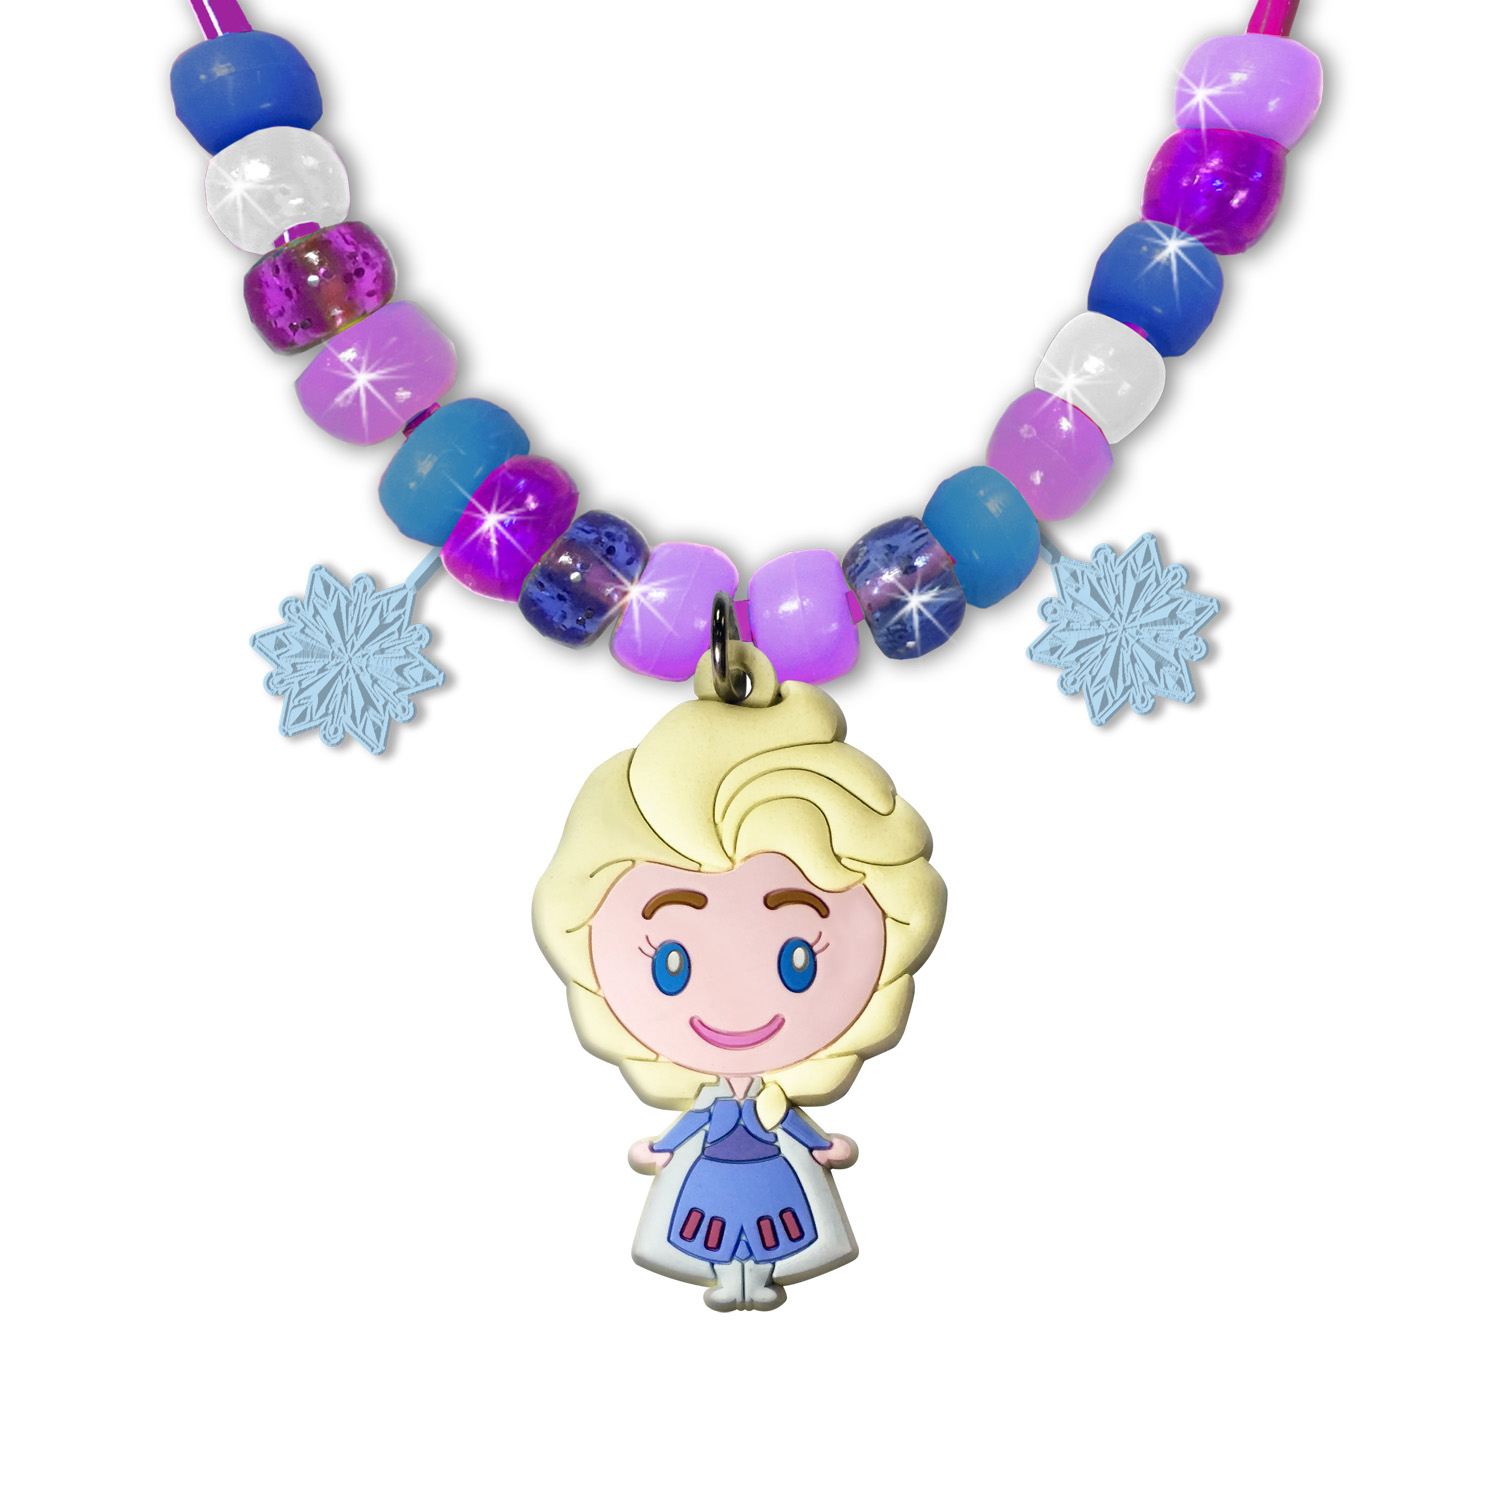 Disney Frozen 2 Plastic Jewelry Activity Set - multi character, multicolored - image 4 of 5